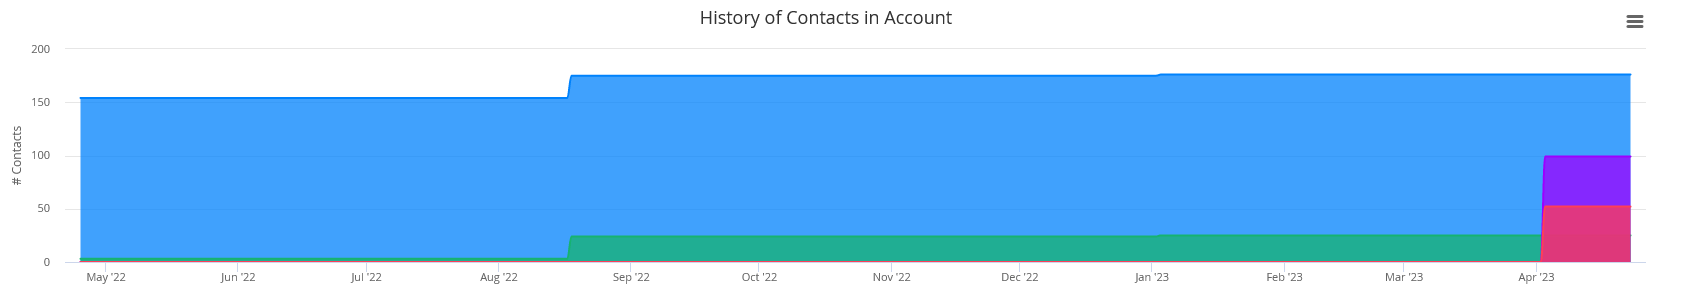 contact history chart